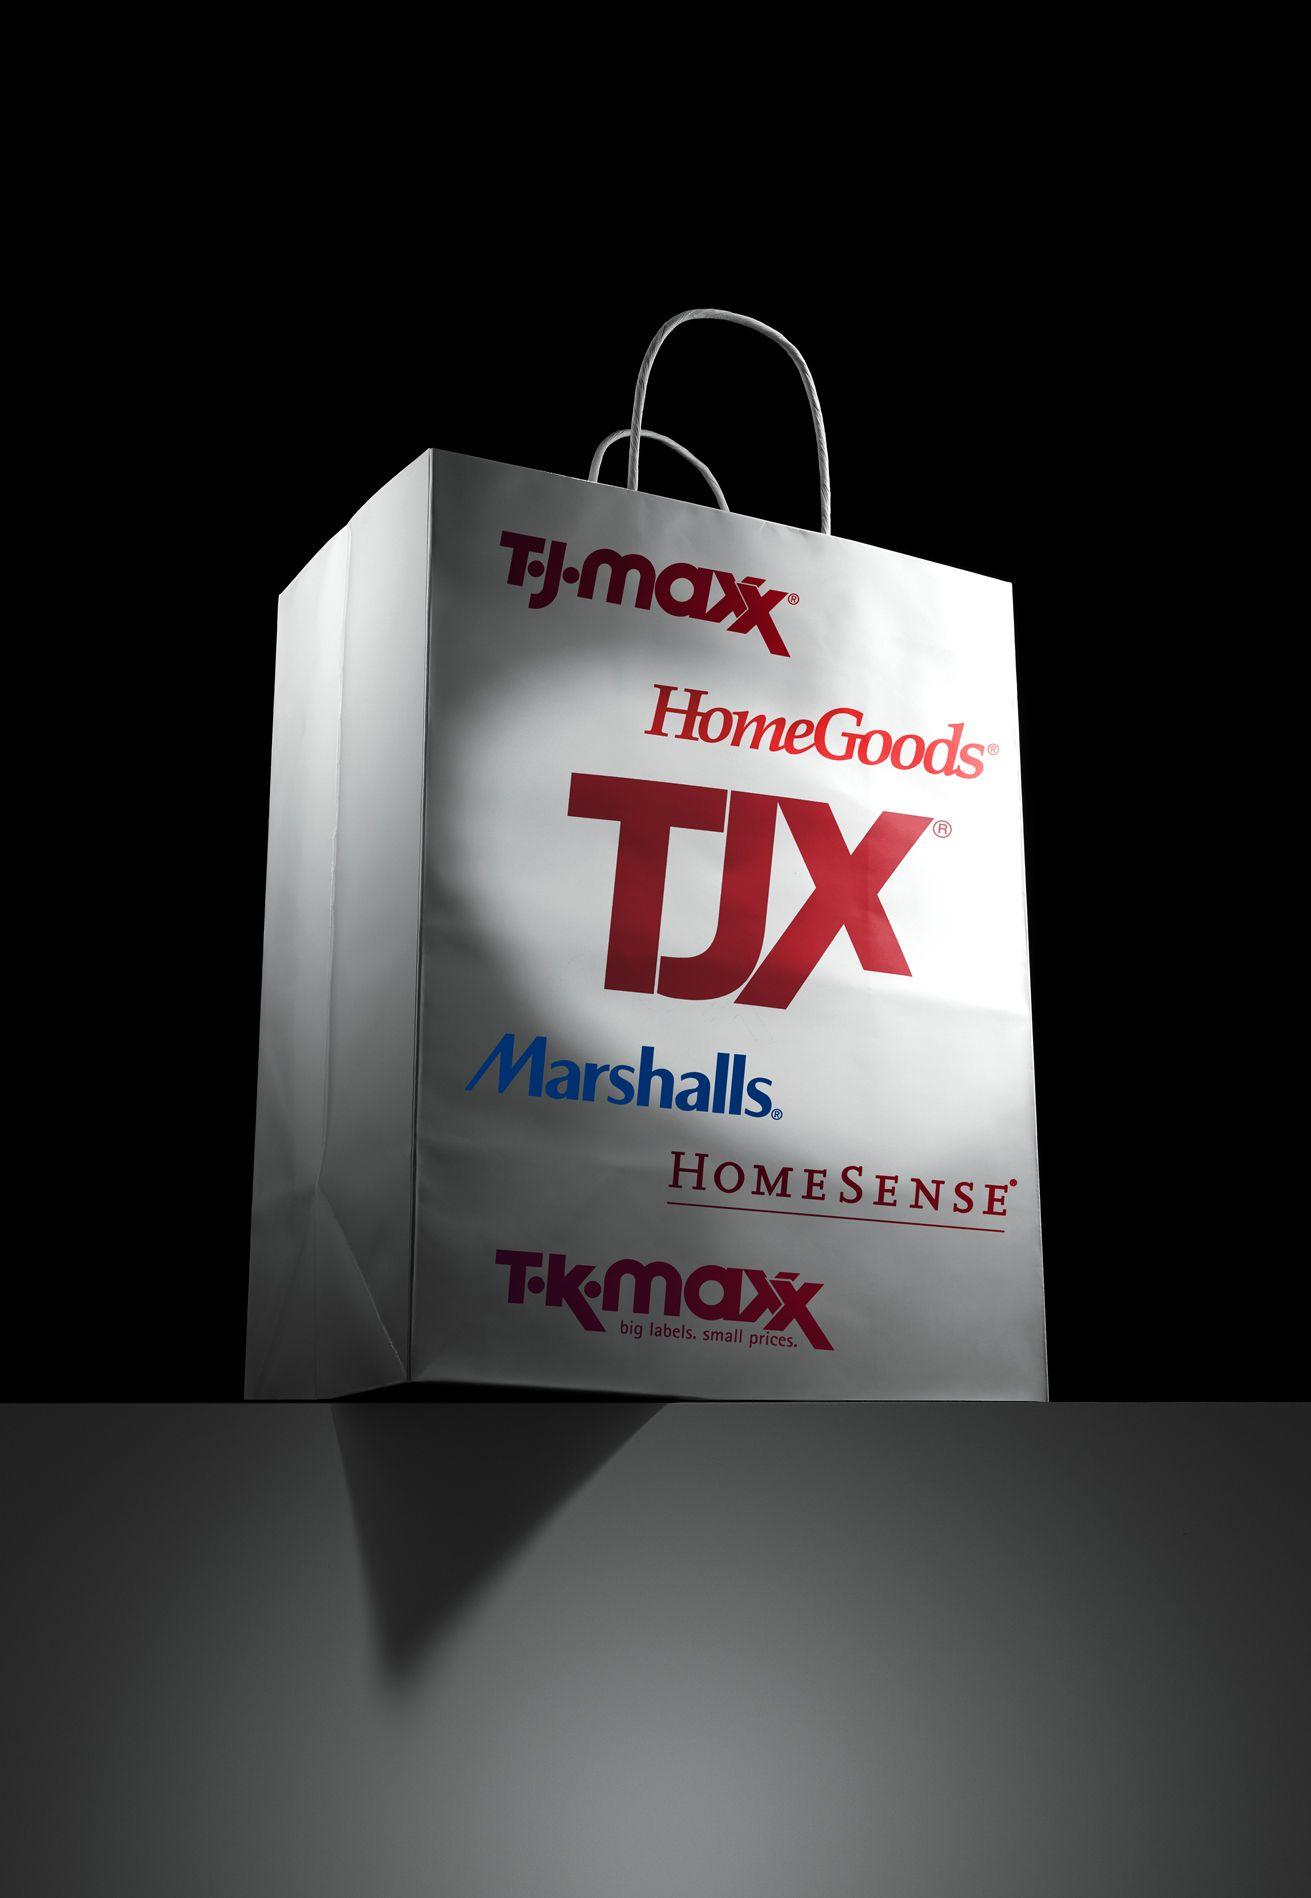 TJ Maxx Logo - LogoDix